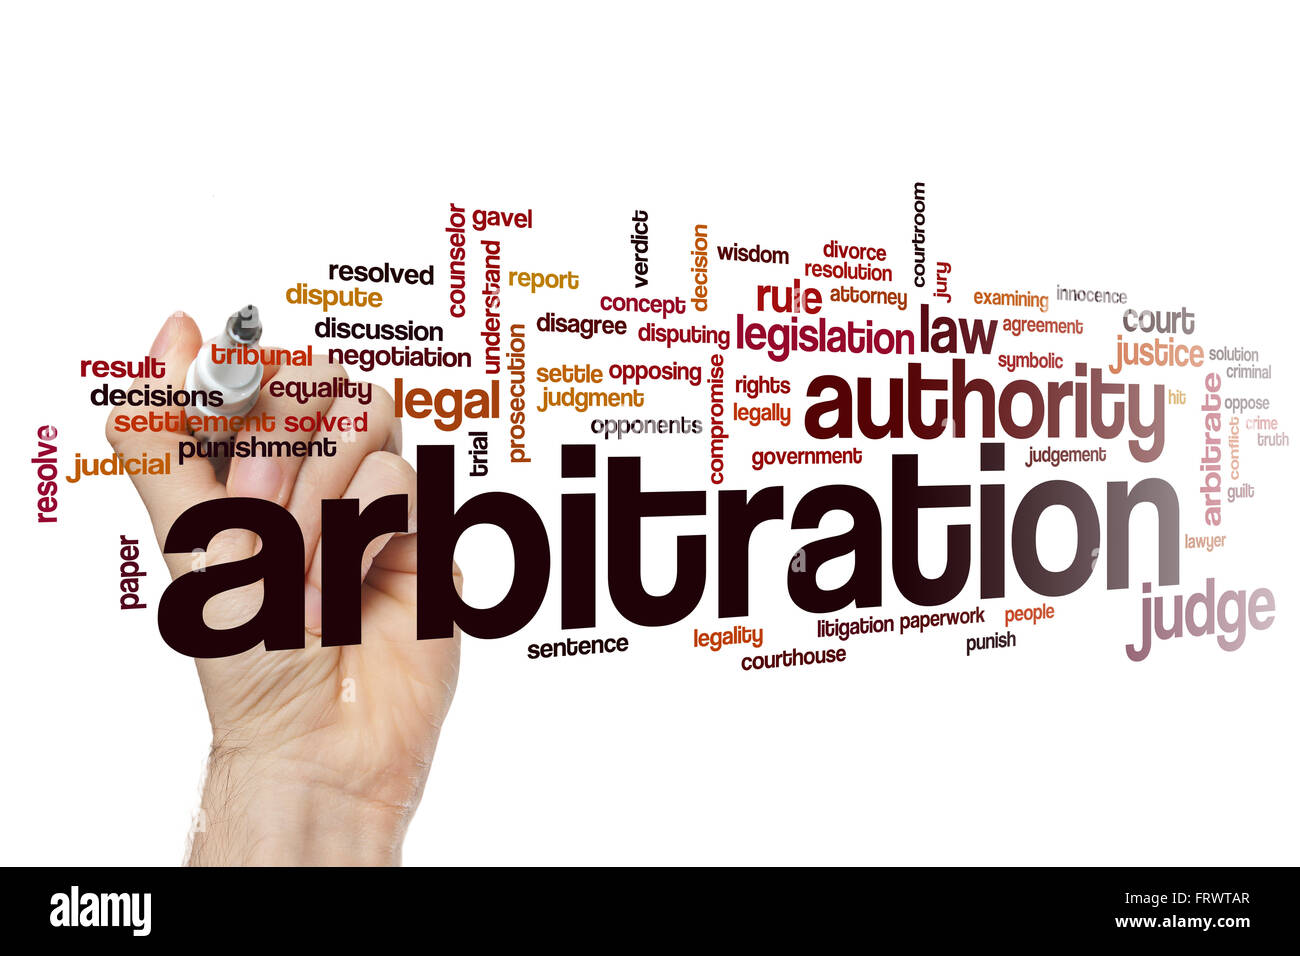 Arbitration word cloud concept Stock Photo